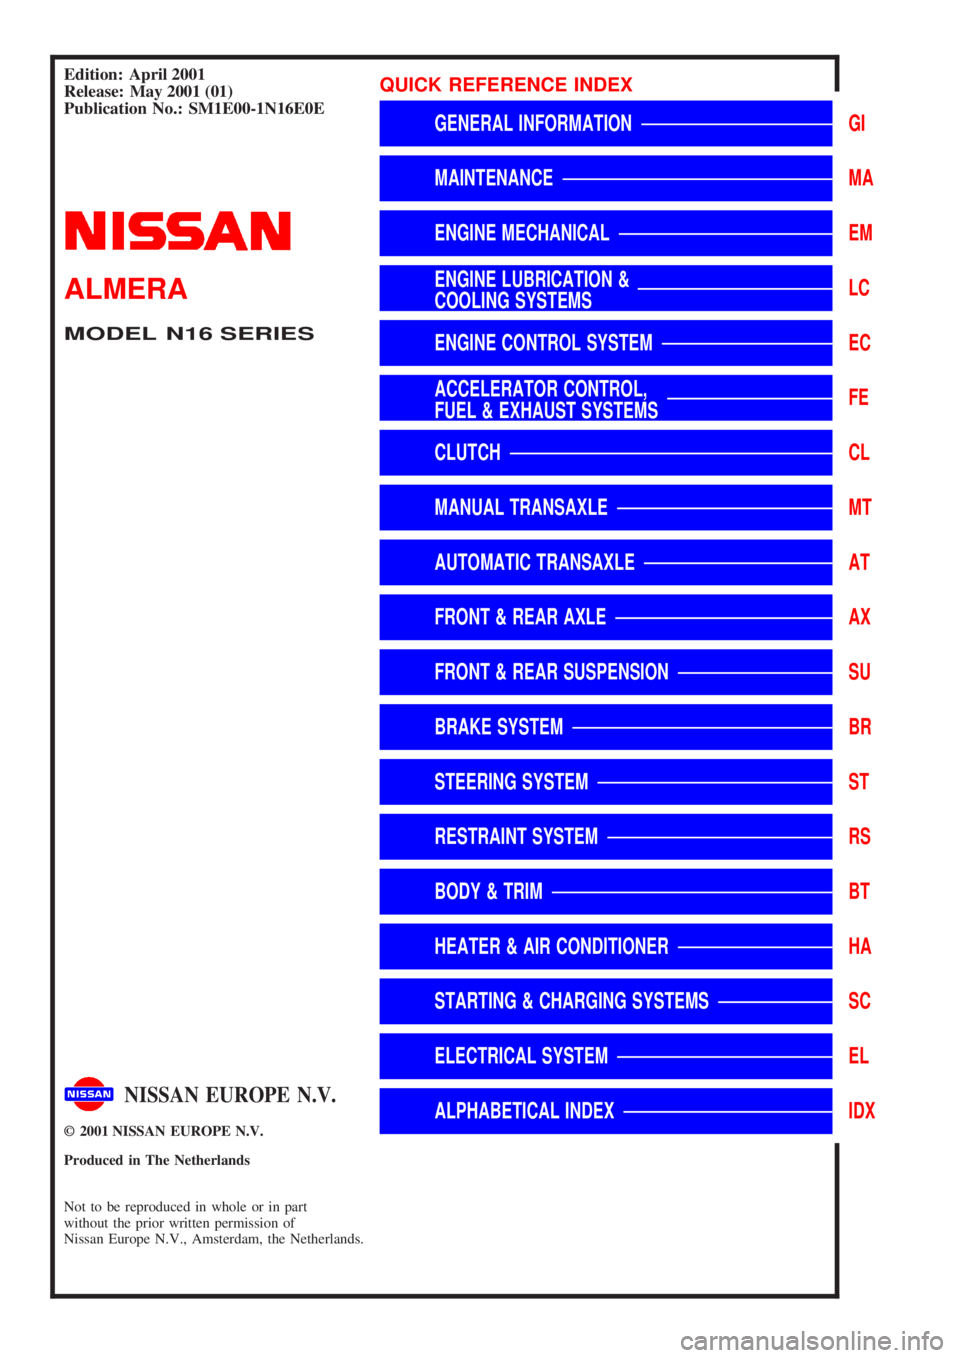 NISSAN ALMERA N16 2001  Electronic Repair Manual Edition:April 2001
Release :May 2001 (01)
Publicatio nNo. :SM 1E00-1N16E0E
GENERA LINFORMATIONGI
MAINTENANCEMA
ENGIN EMECHANICALEM
ENGIN ELUBRICATIO N&
COOLIN GSYSTEMSLC
ENGIN ECONTRO LSYSTEMEC
ACCELE